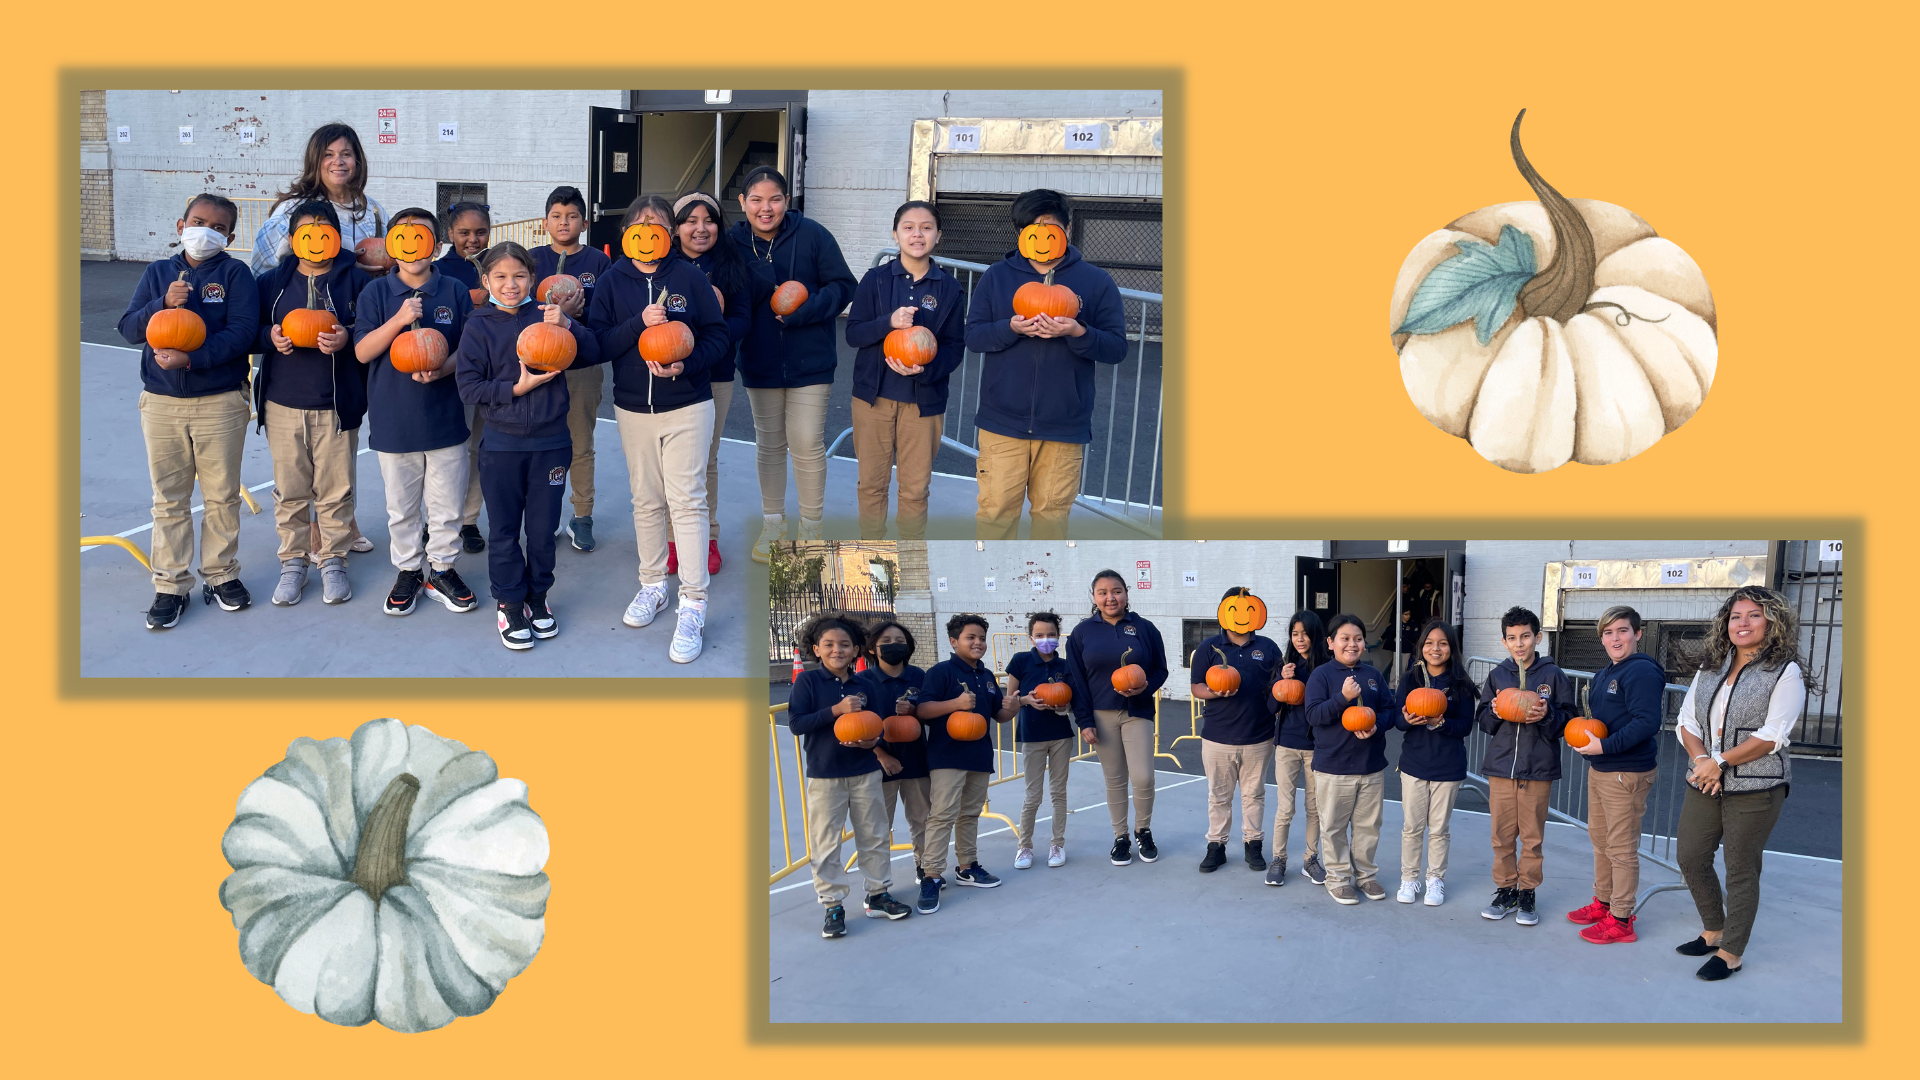 Students smiling and enjoying pumpkins